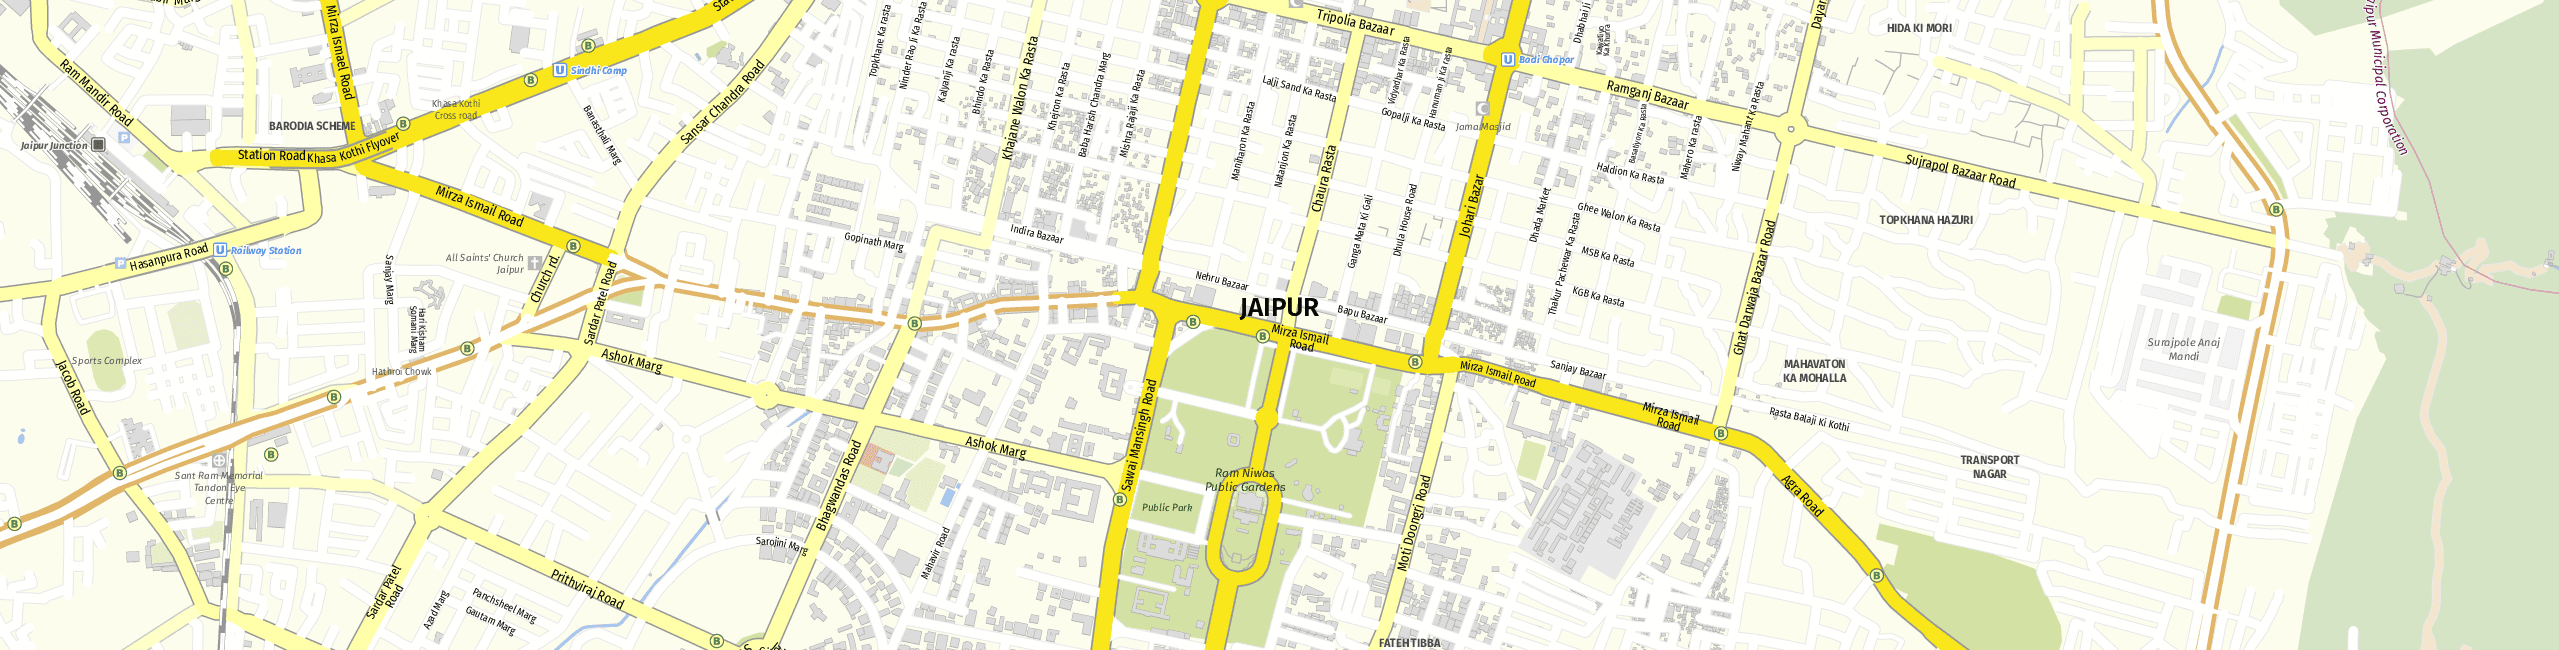 Stadtplan Jaipur zum Downloaden.